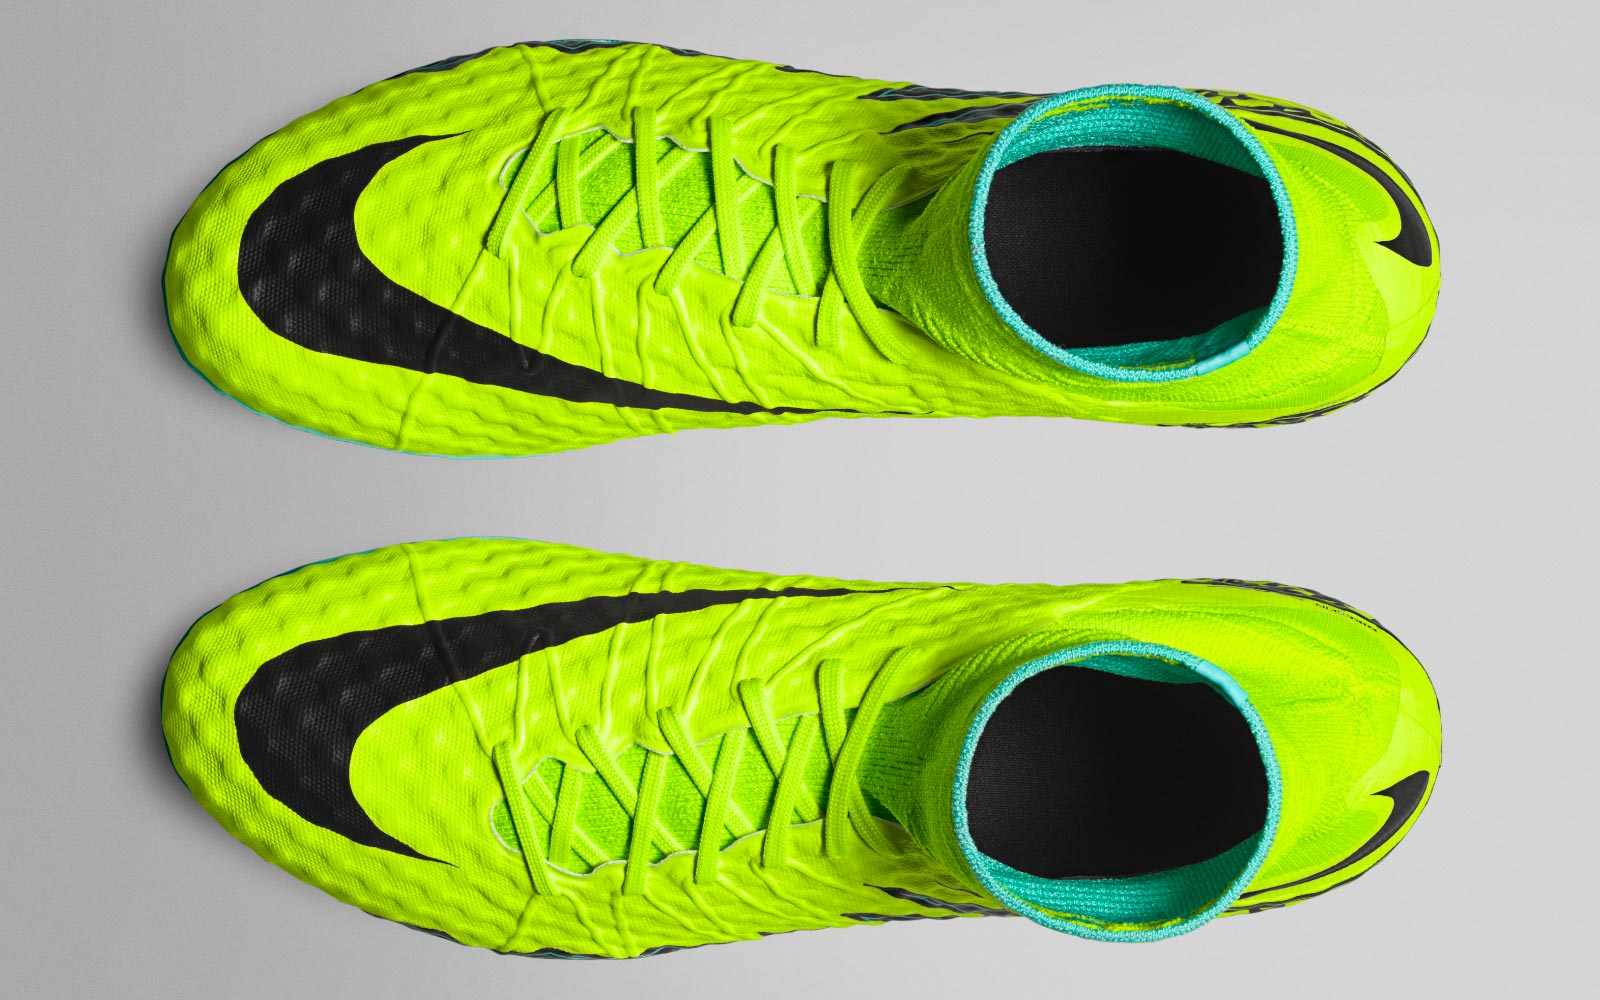 Ligadura Apoyarse Tumba Nike "Spark Brilliance" Euro 2016 Football Boot Collection Unveiled - Footy  Headlines